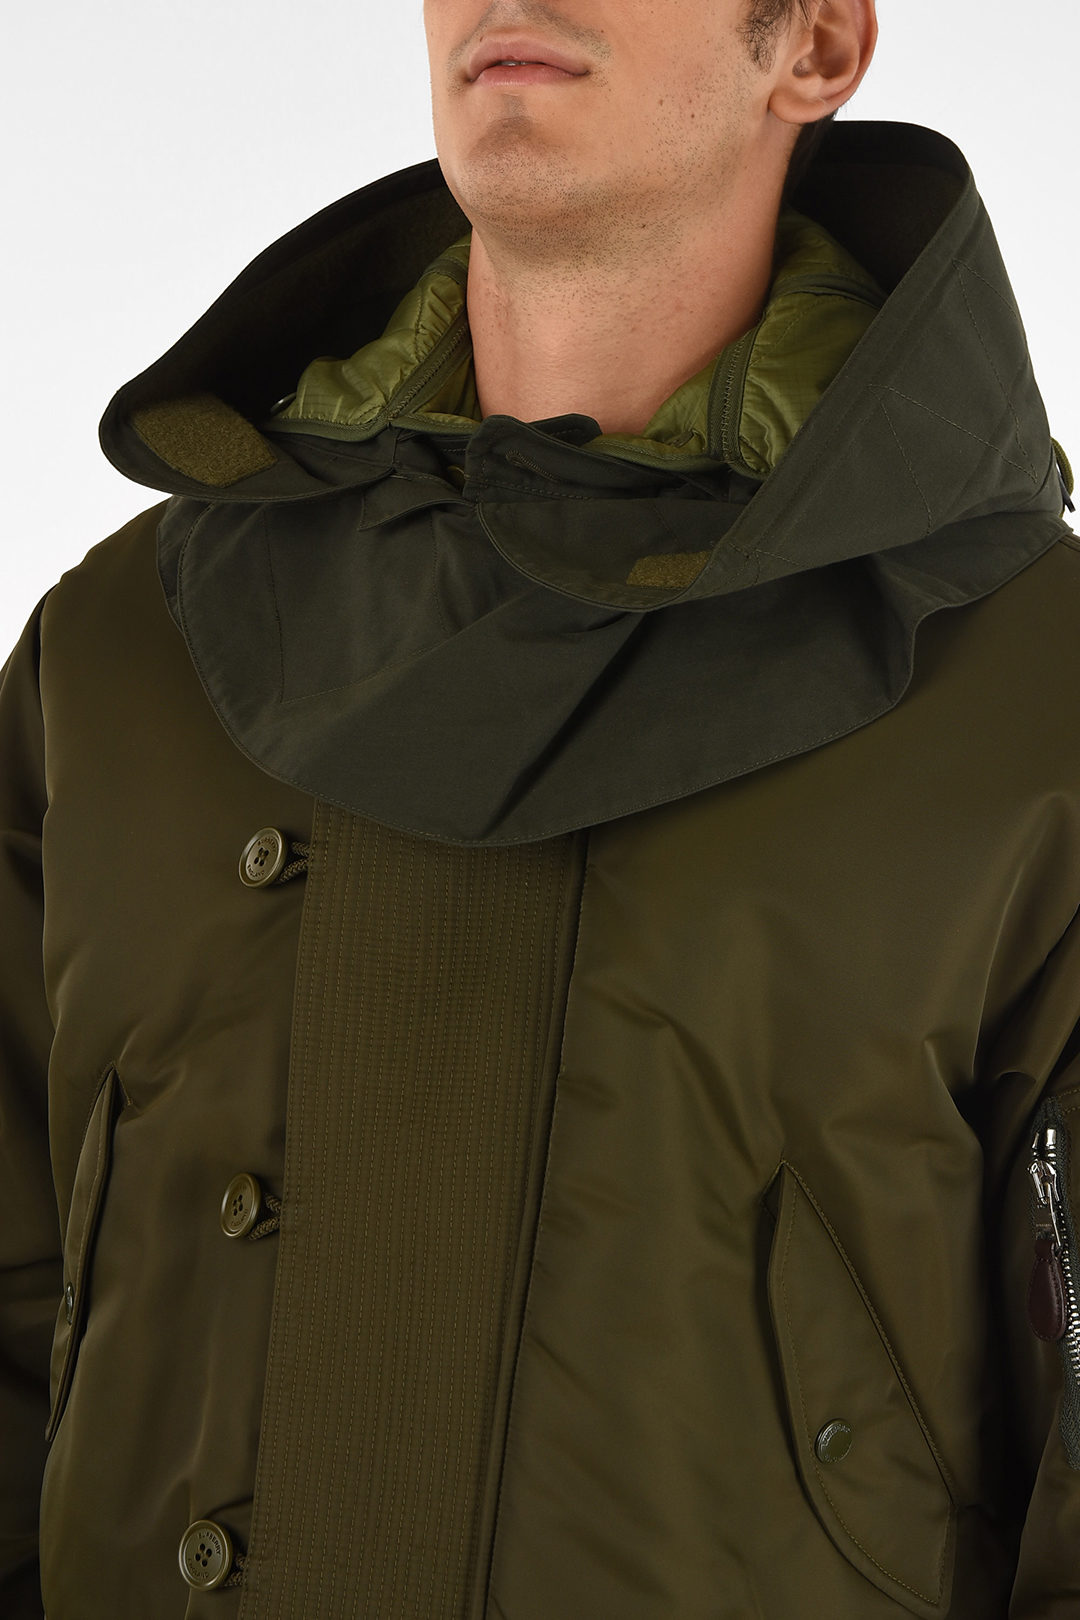 Burberry Nylon Parka with Detachable Vest men - Glamood Outlet